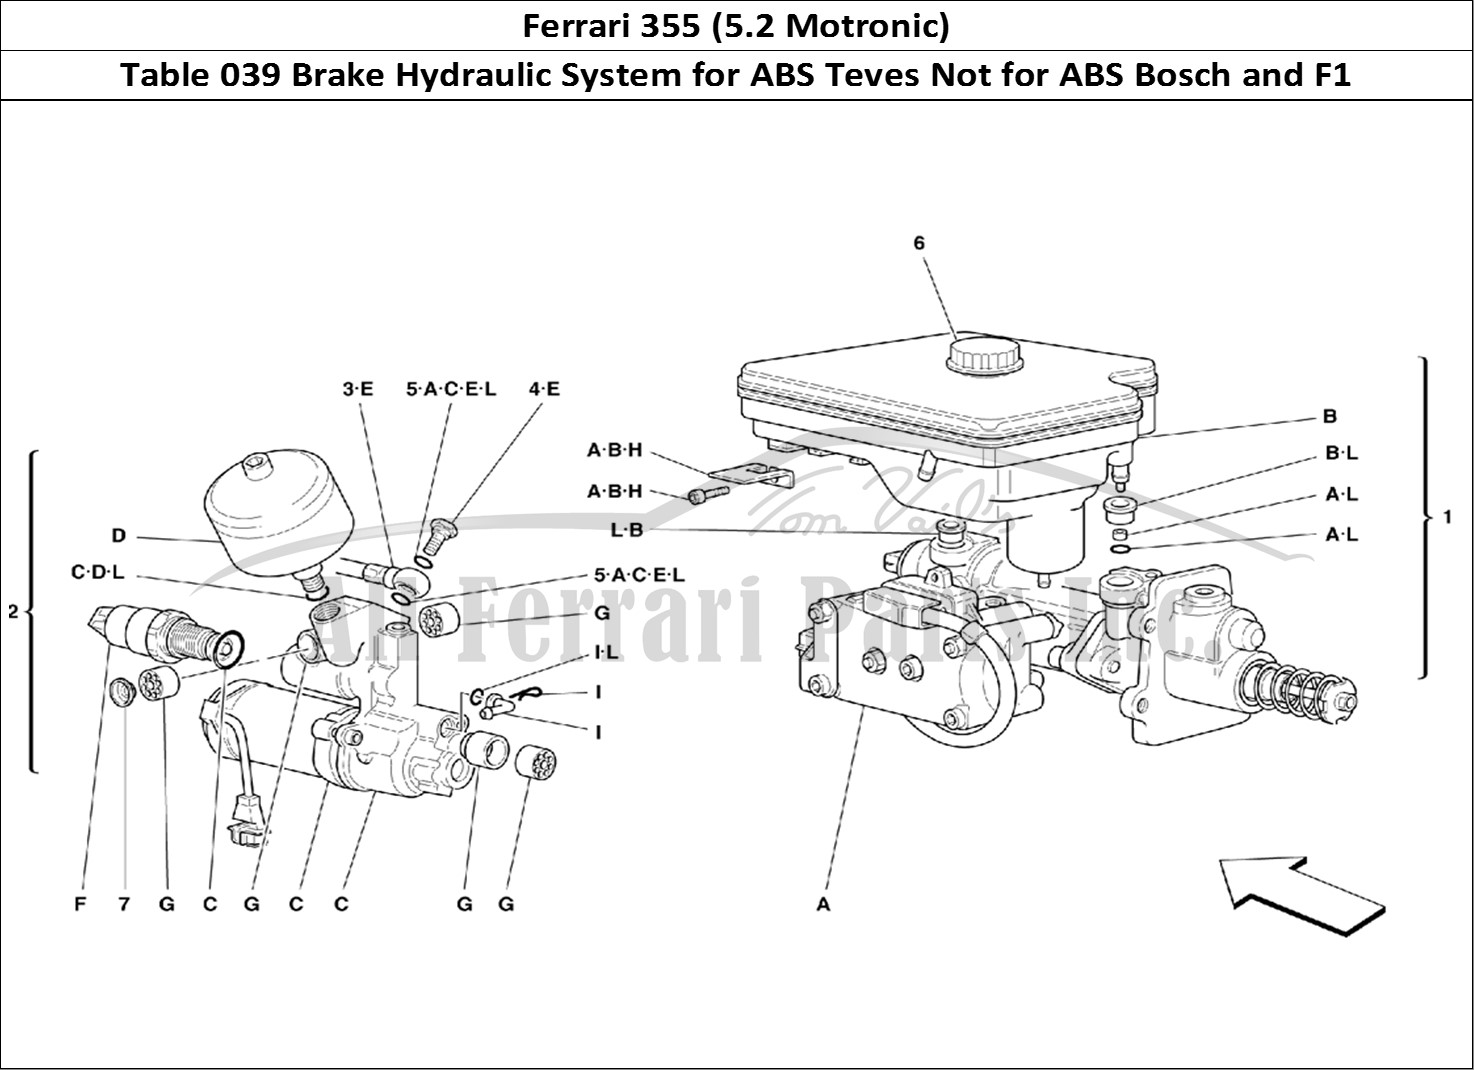 Ferrari Parts Ferrari 355 (5.2 Motronic) Page 039 Hydraulic System for ABS